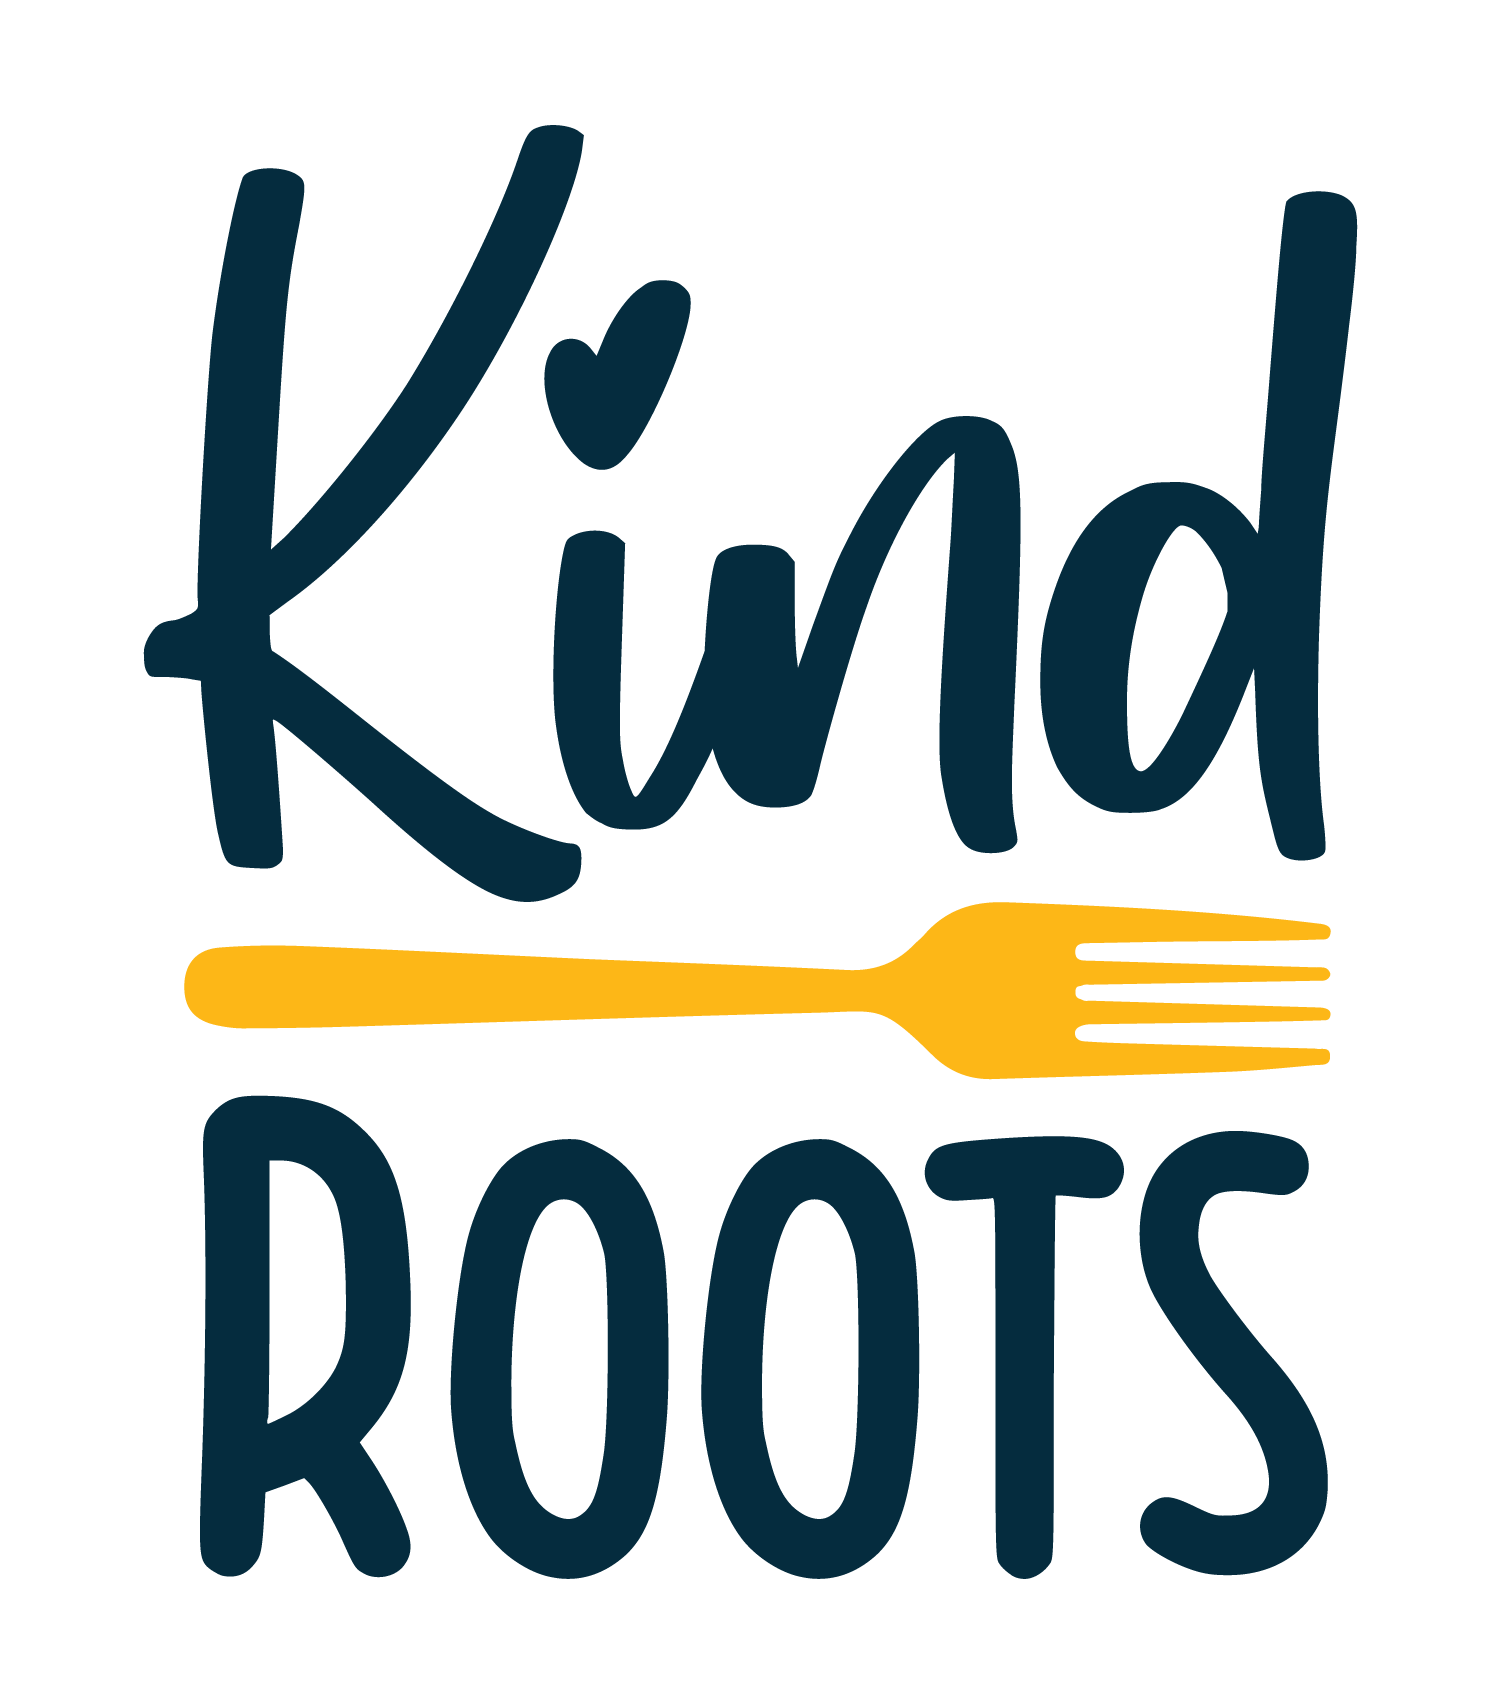 Kind Roots Shop